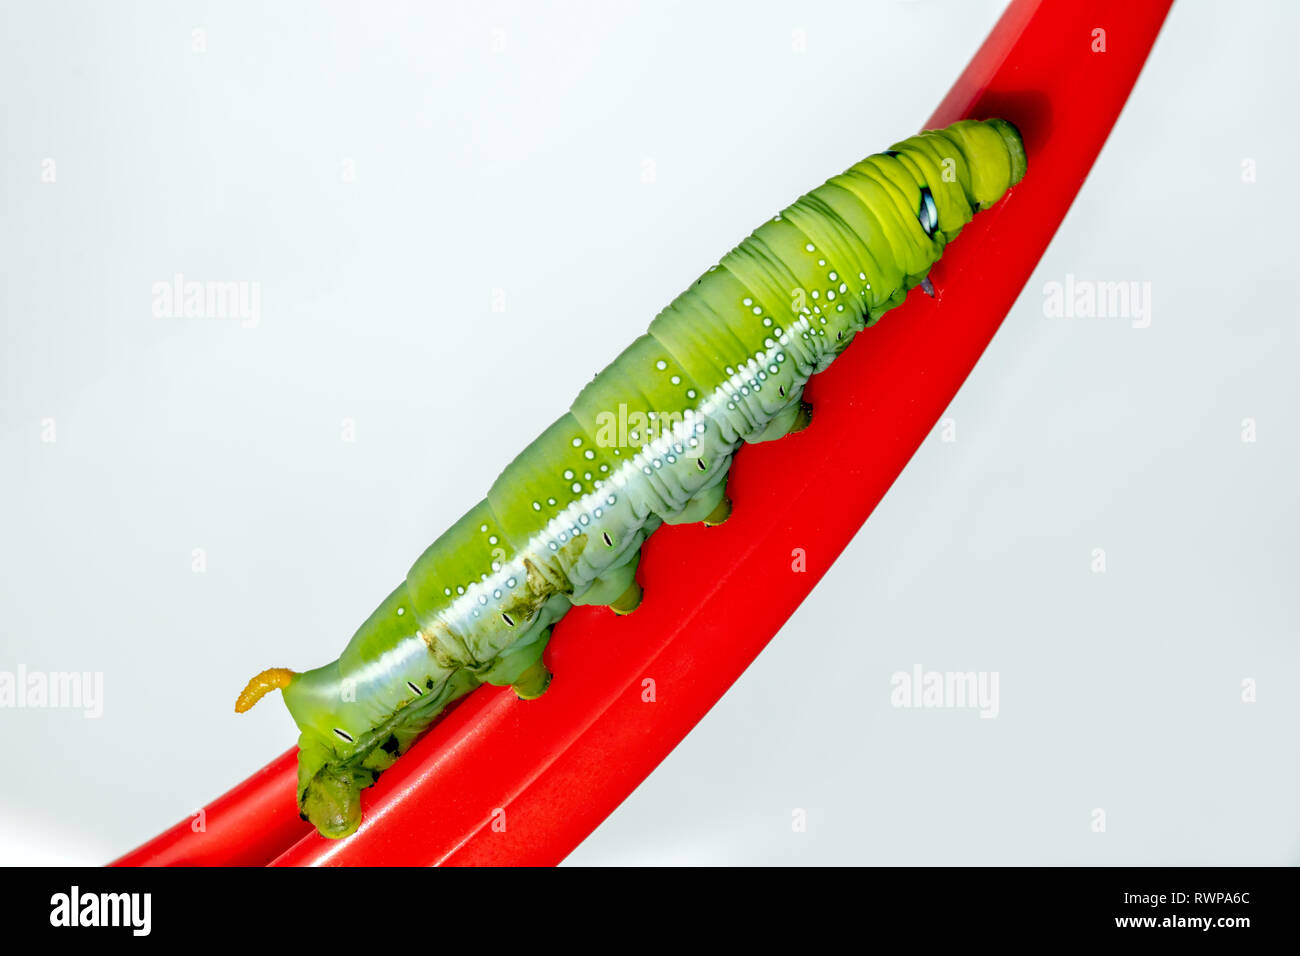 Caterpillar grip hi-res stock photography and images - Alamy